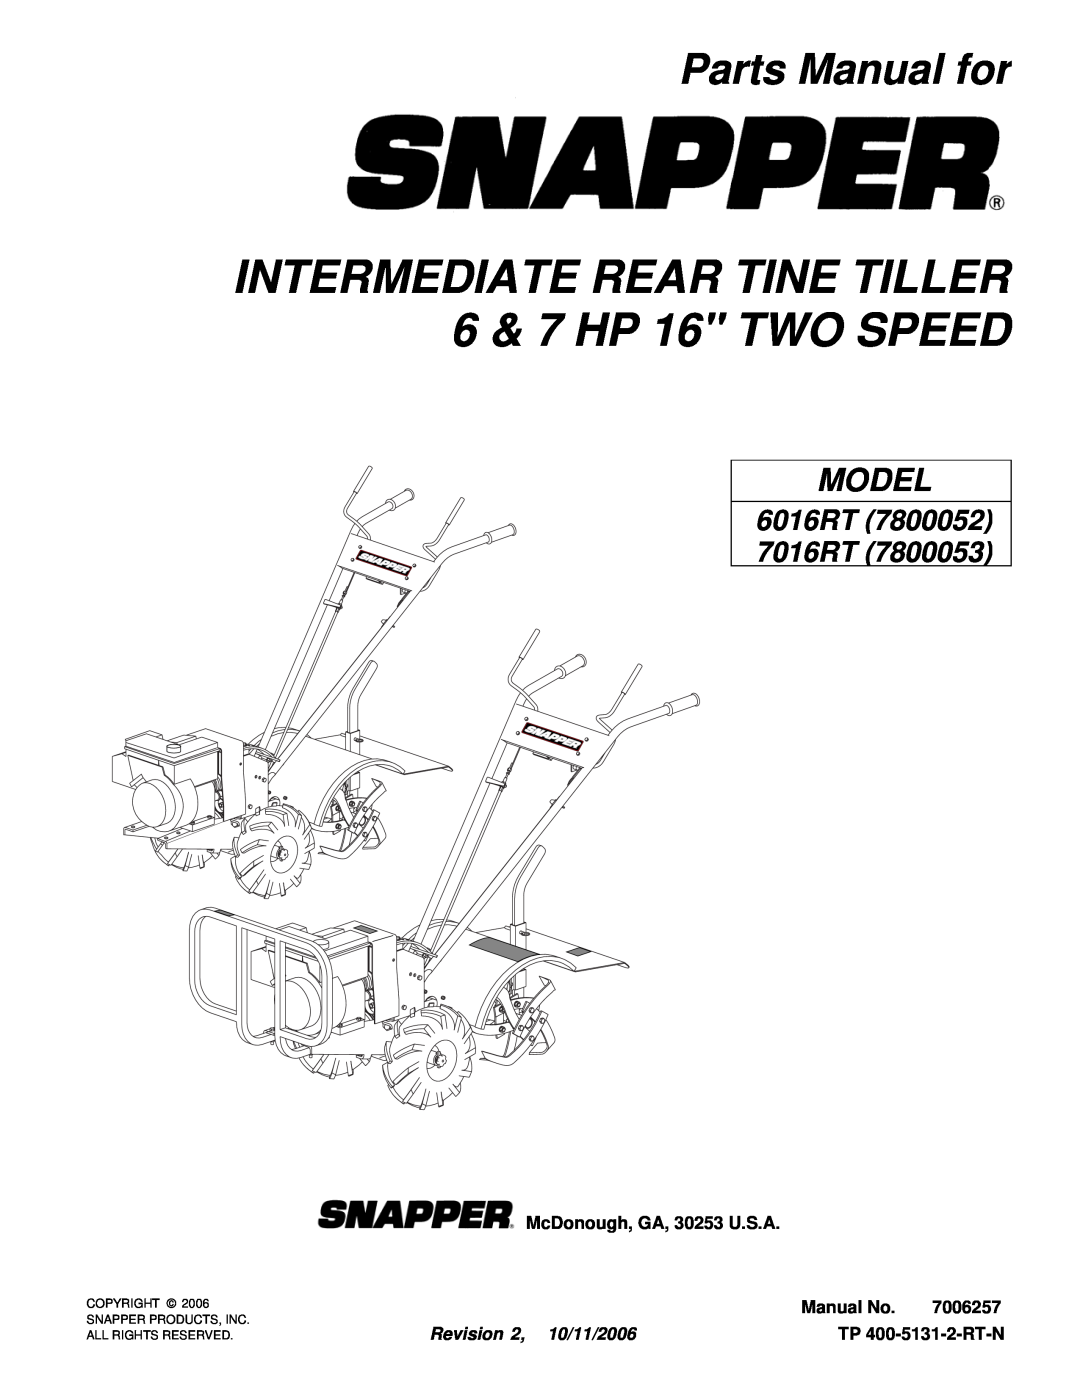 Snapper 7016RT manual Parts Manual for, McDonough, GA, 30253 U.S.A, Manual No, 7006257, Revision 2, 10/11/2006, Model 